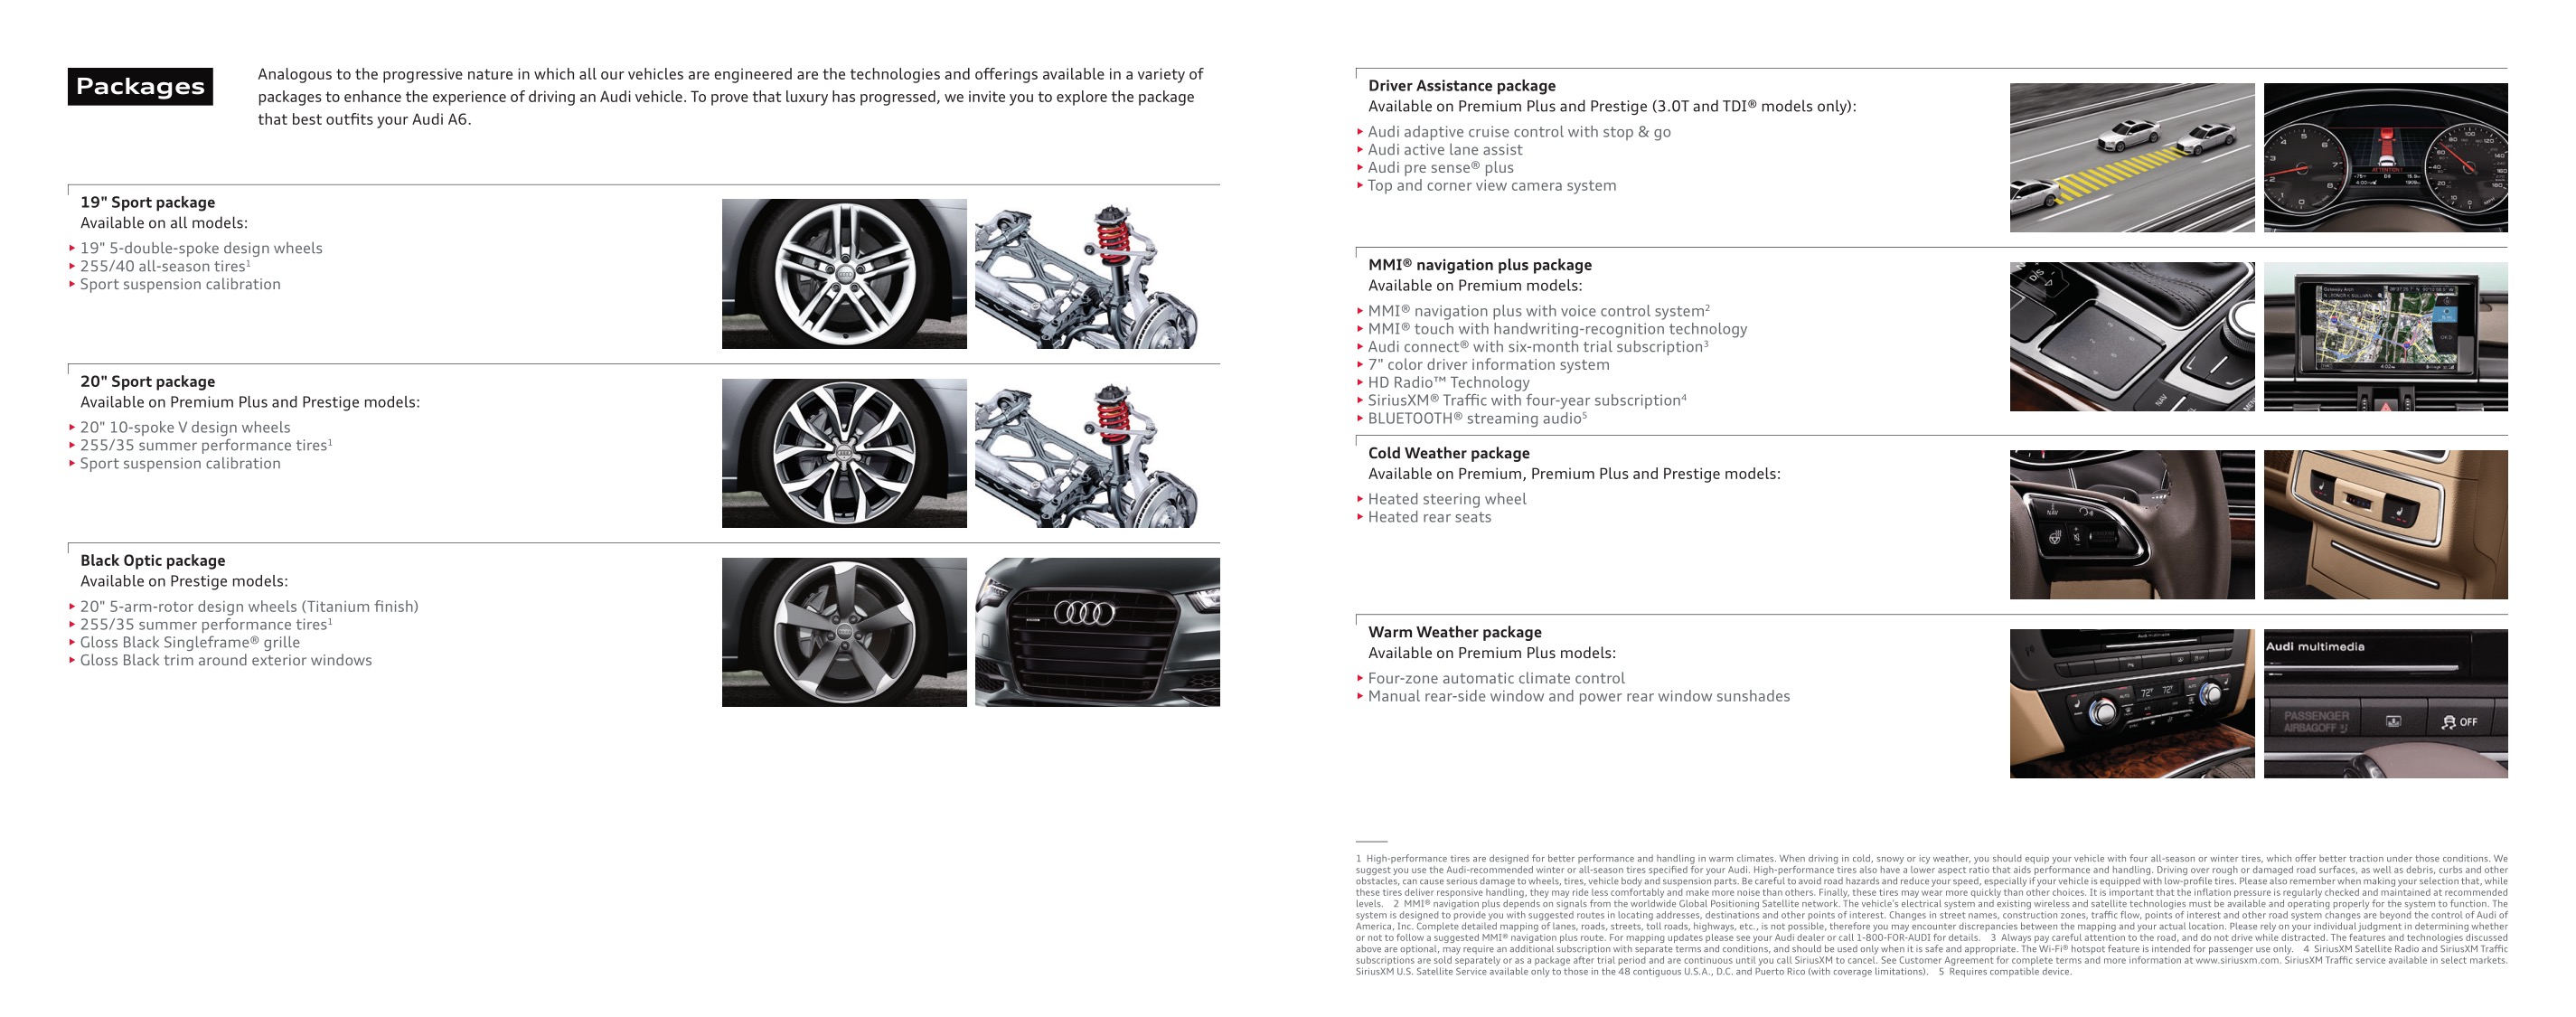 2015 Audi A6 Brochure Page 21